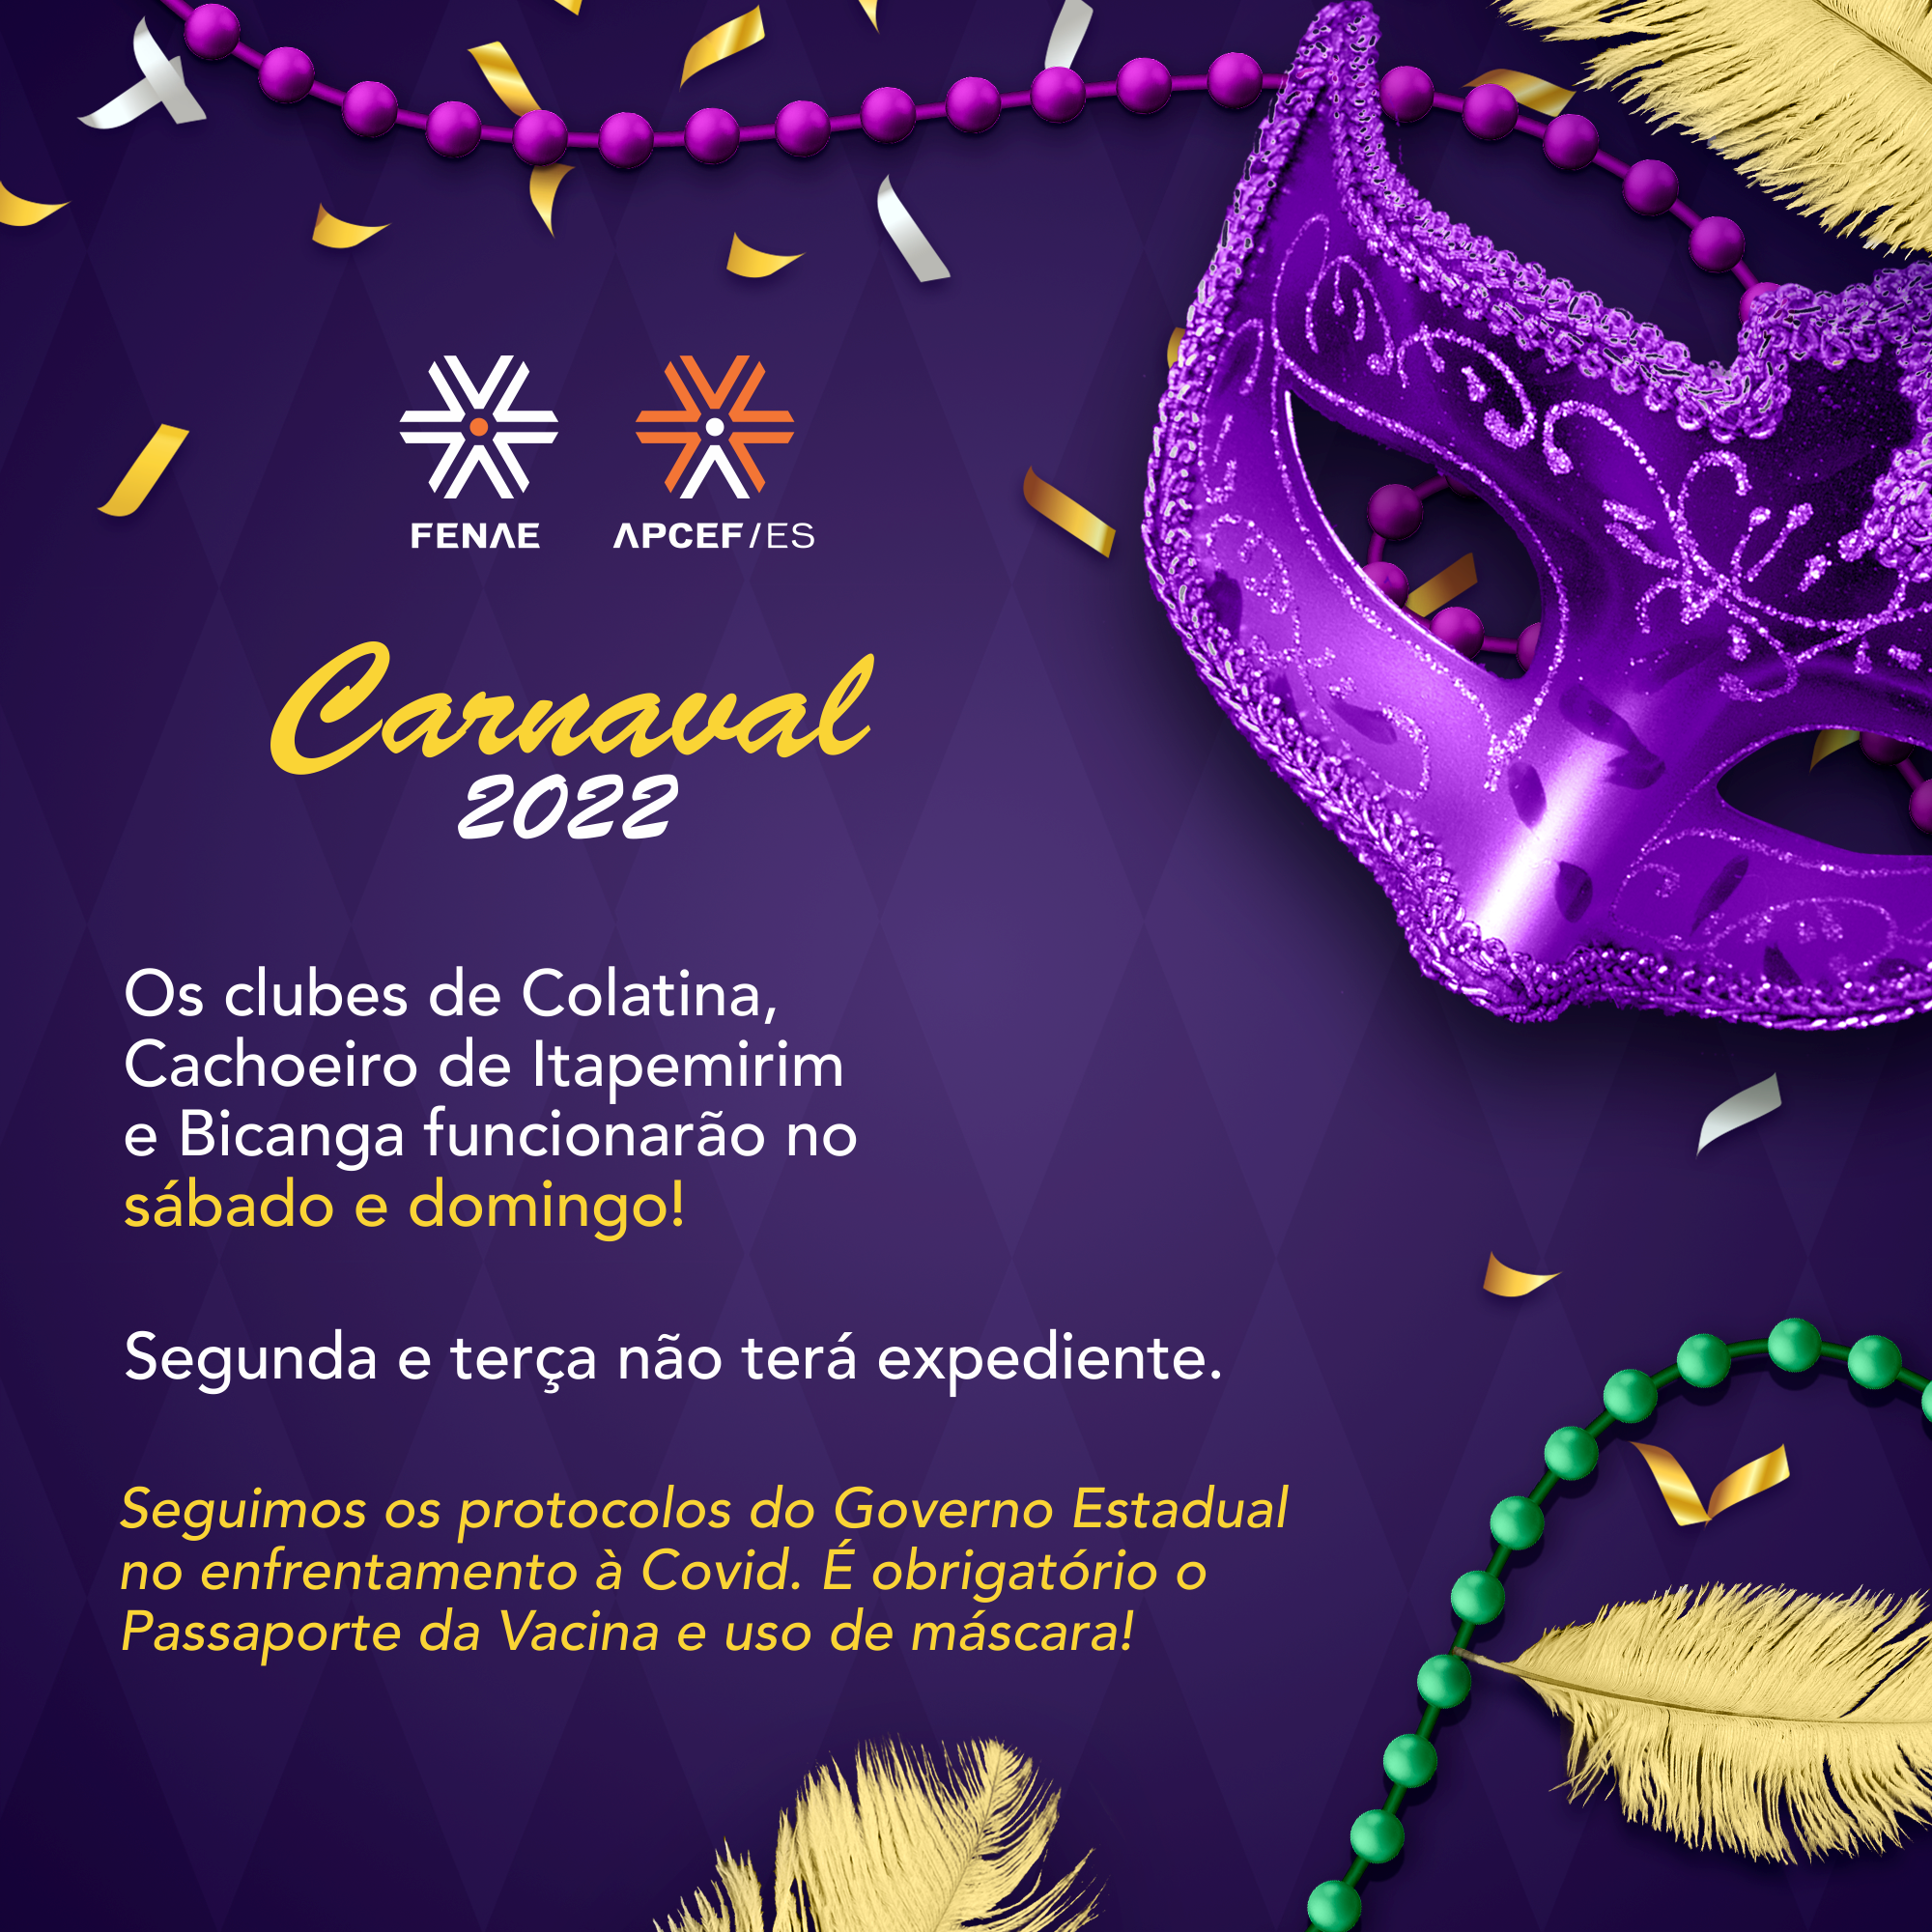 Carnaval 2022 - Post 2.png